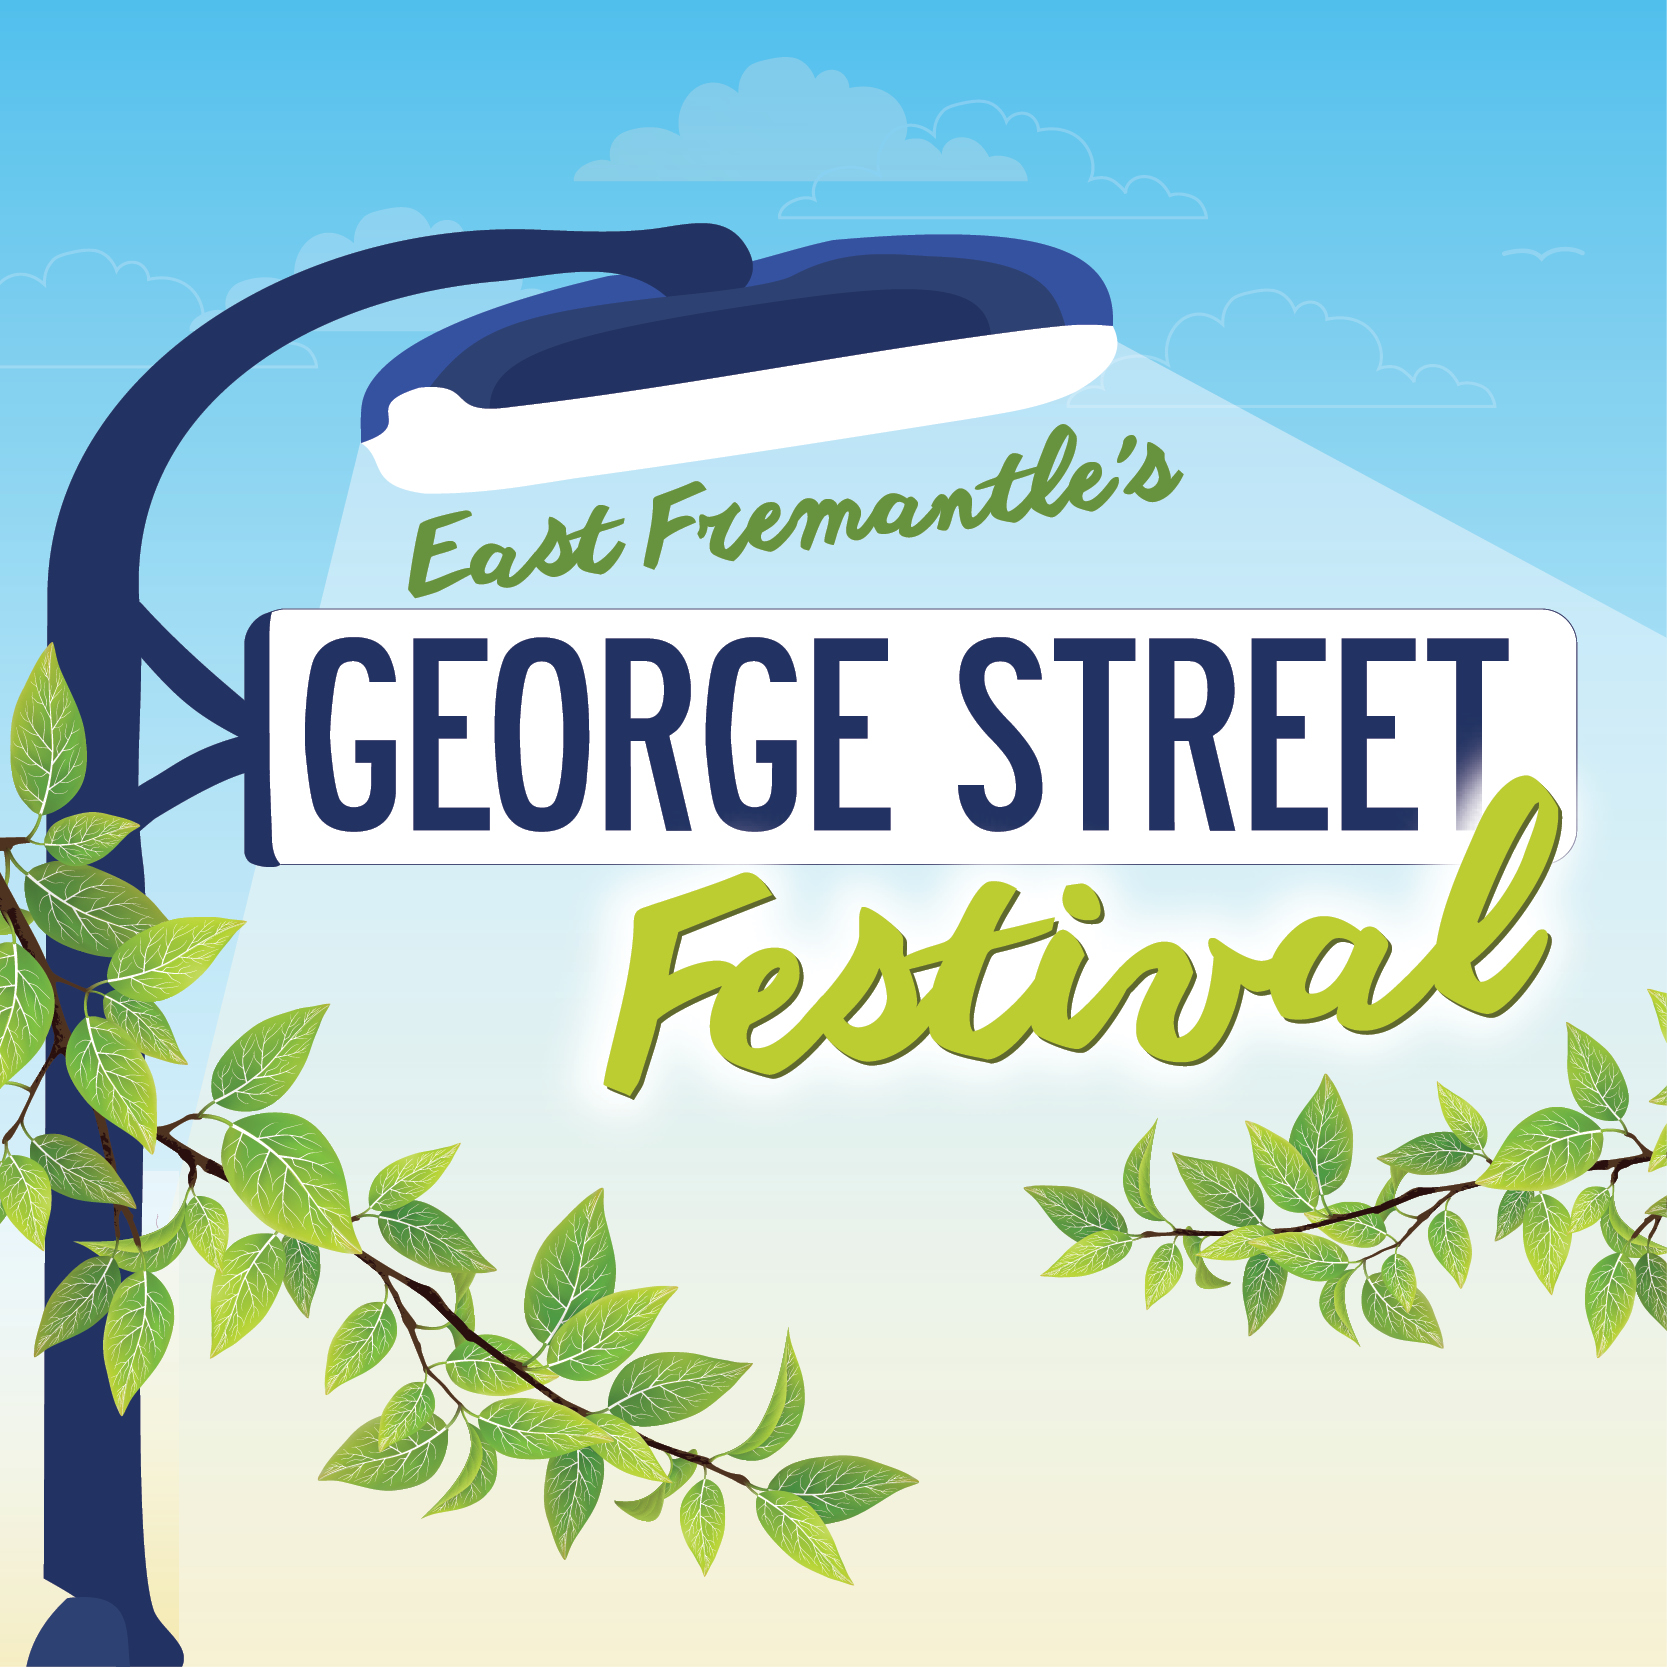 East Fremantle's George Street Festival